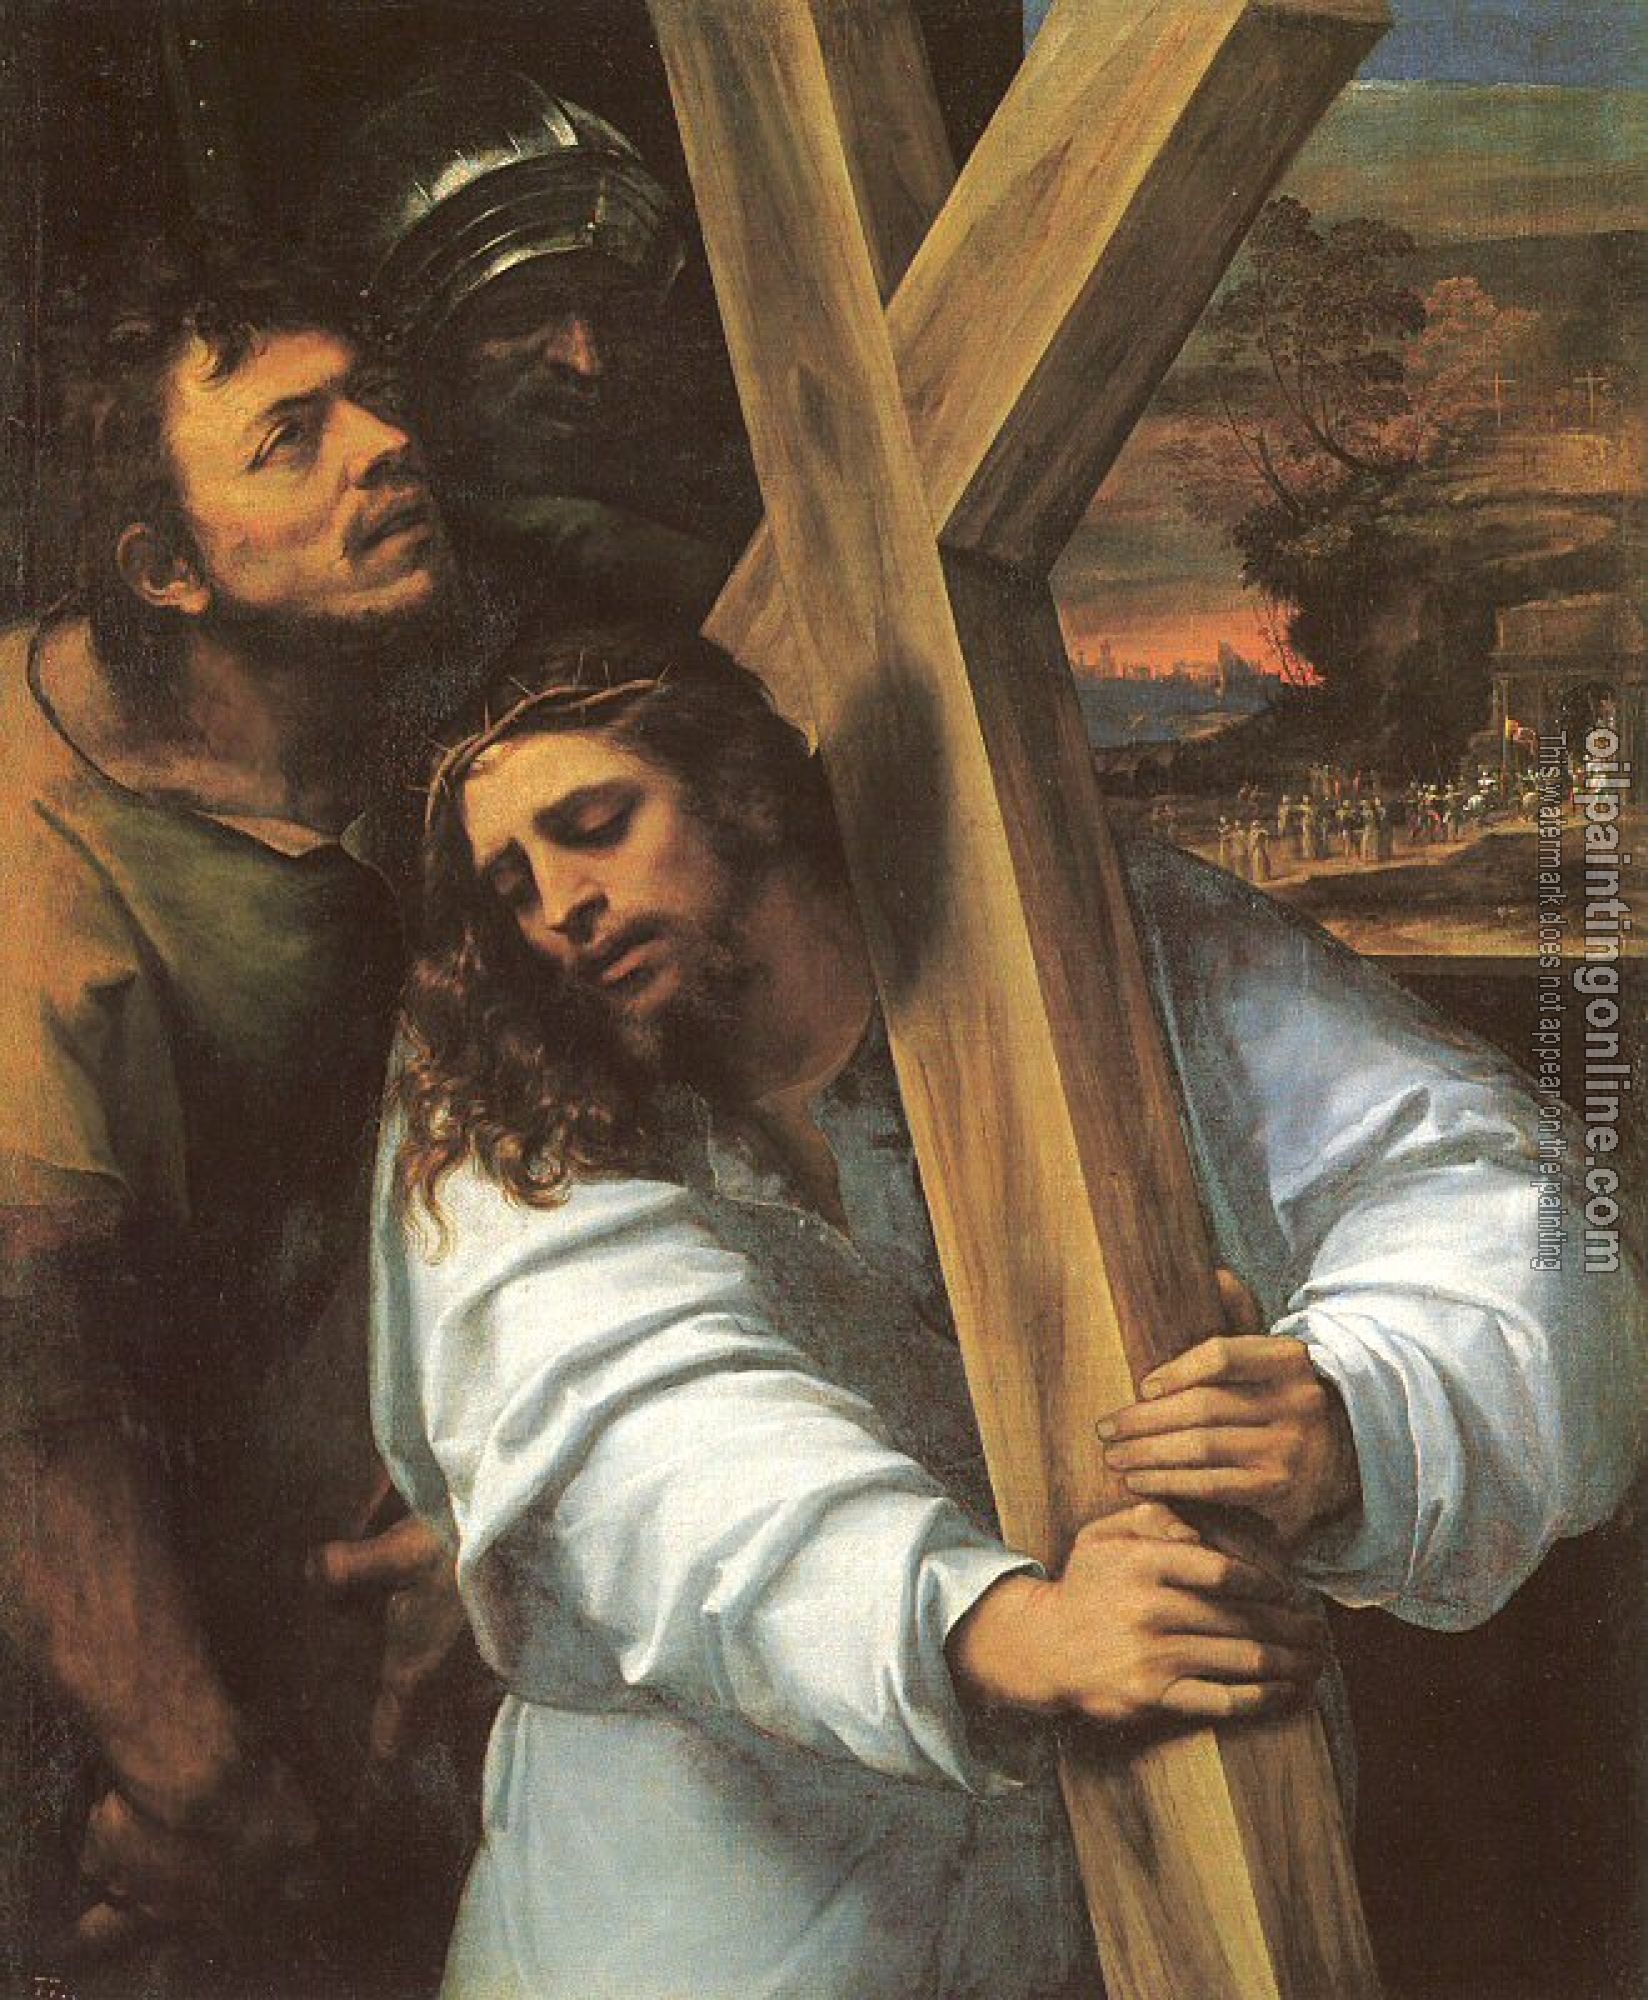 Piombo, Sebastiano del - Jesus Carrying the Cross